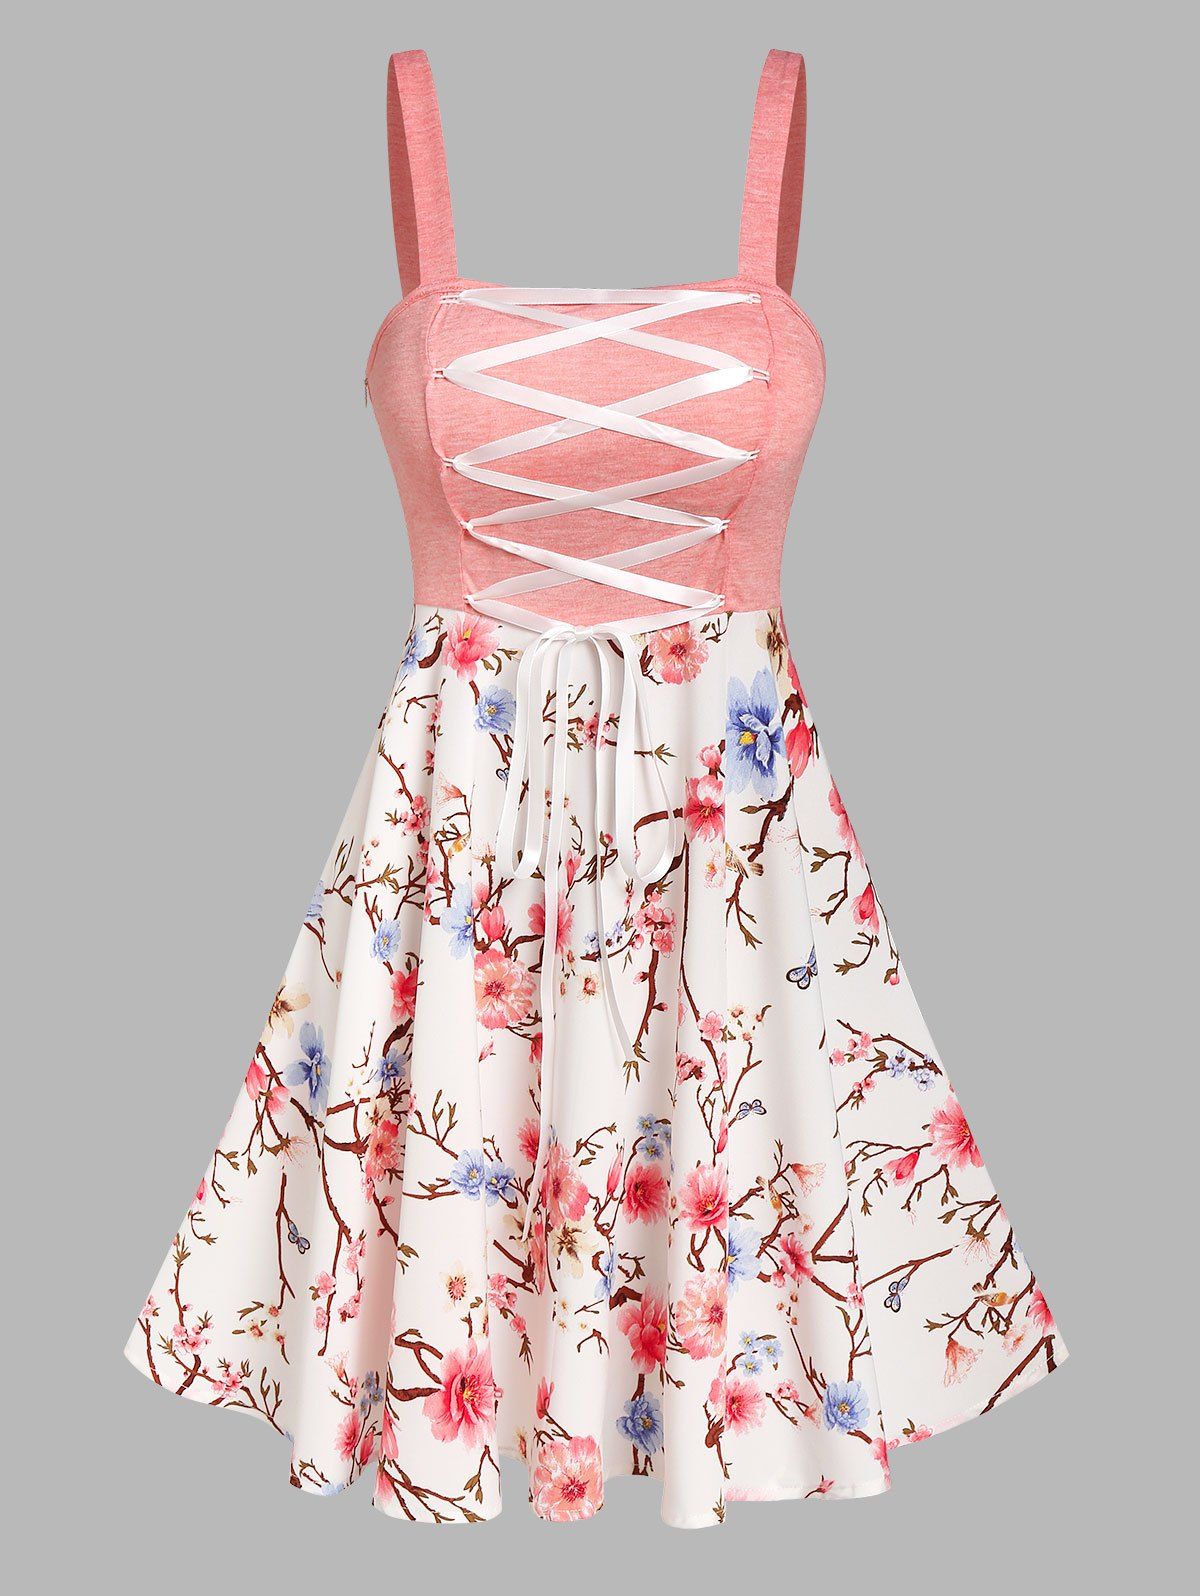 Flower Printed Lace Up High Waist Mini Dress - LIGHT PINK M